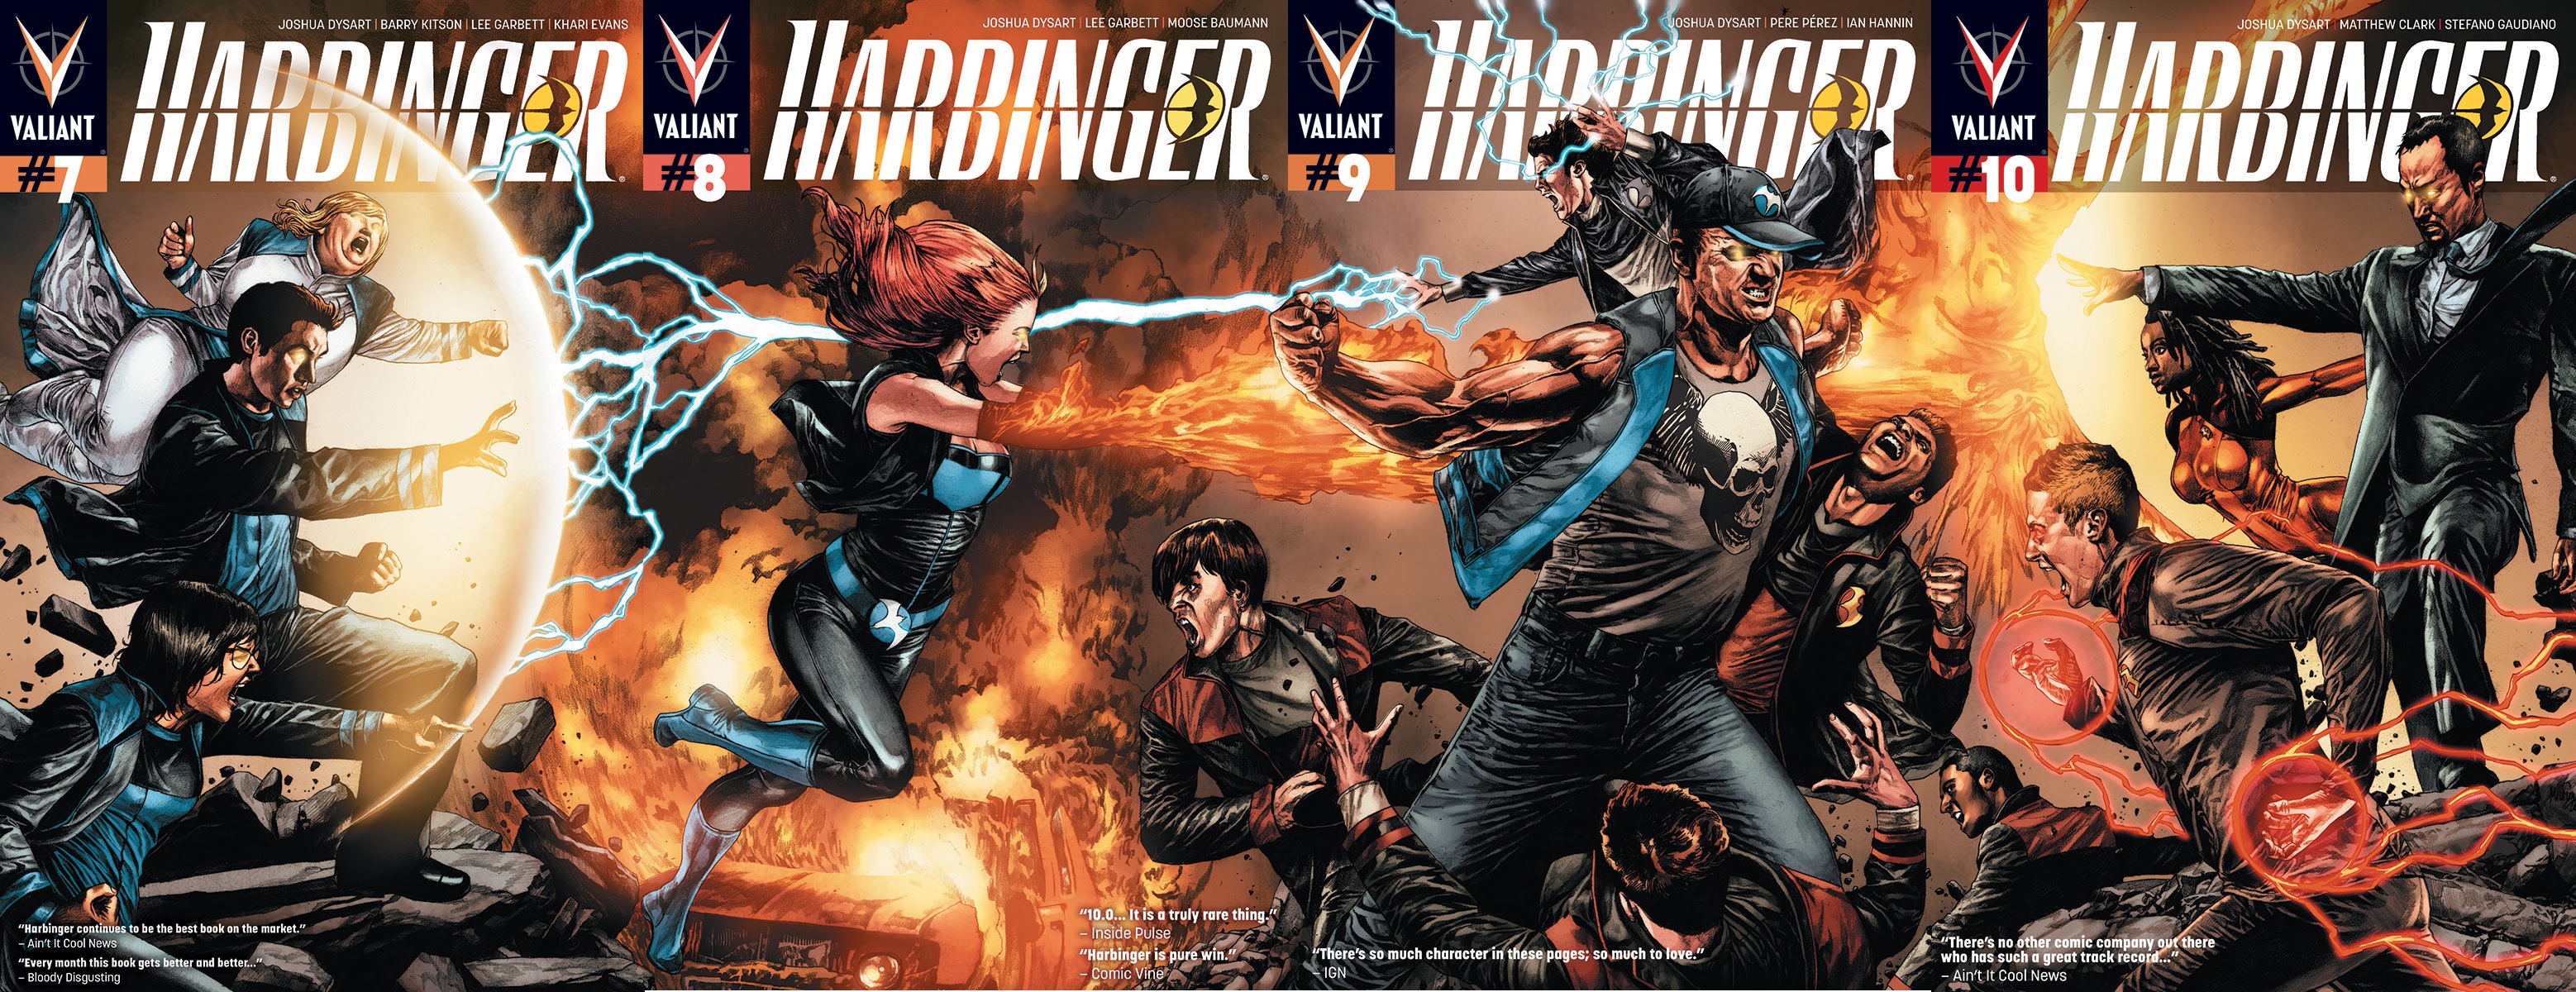 Harbinger Wars #15